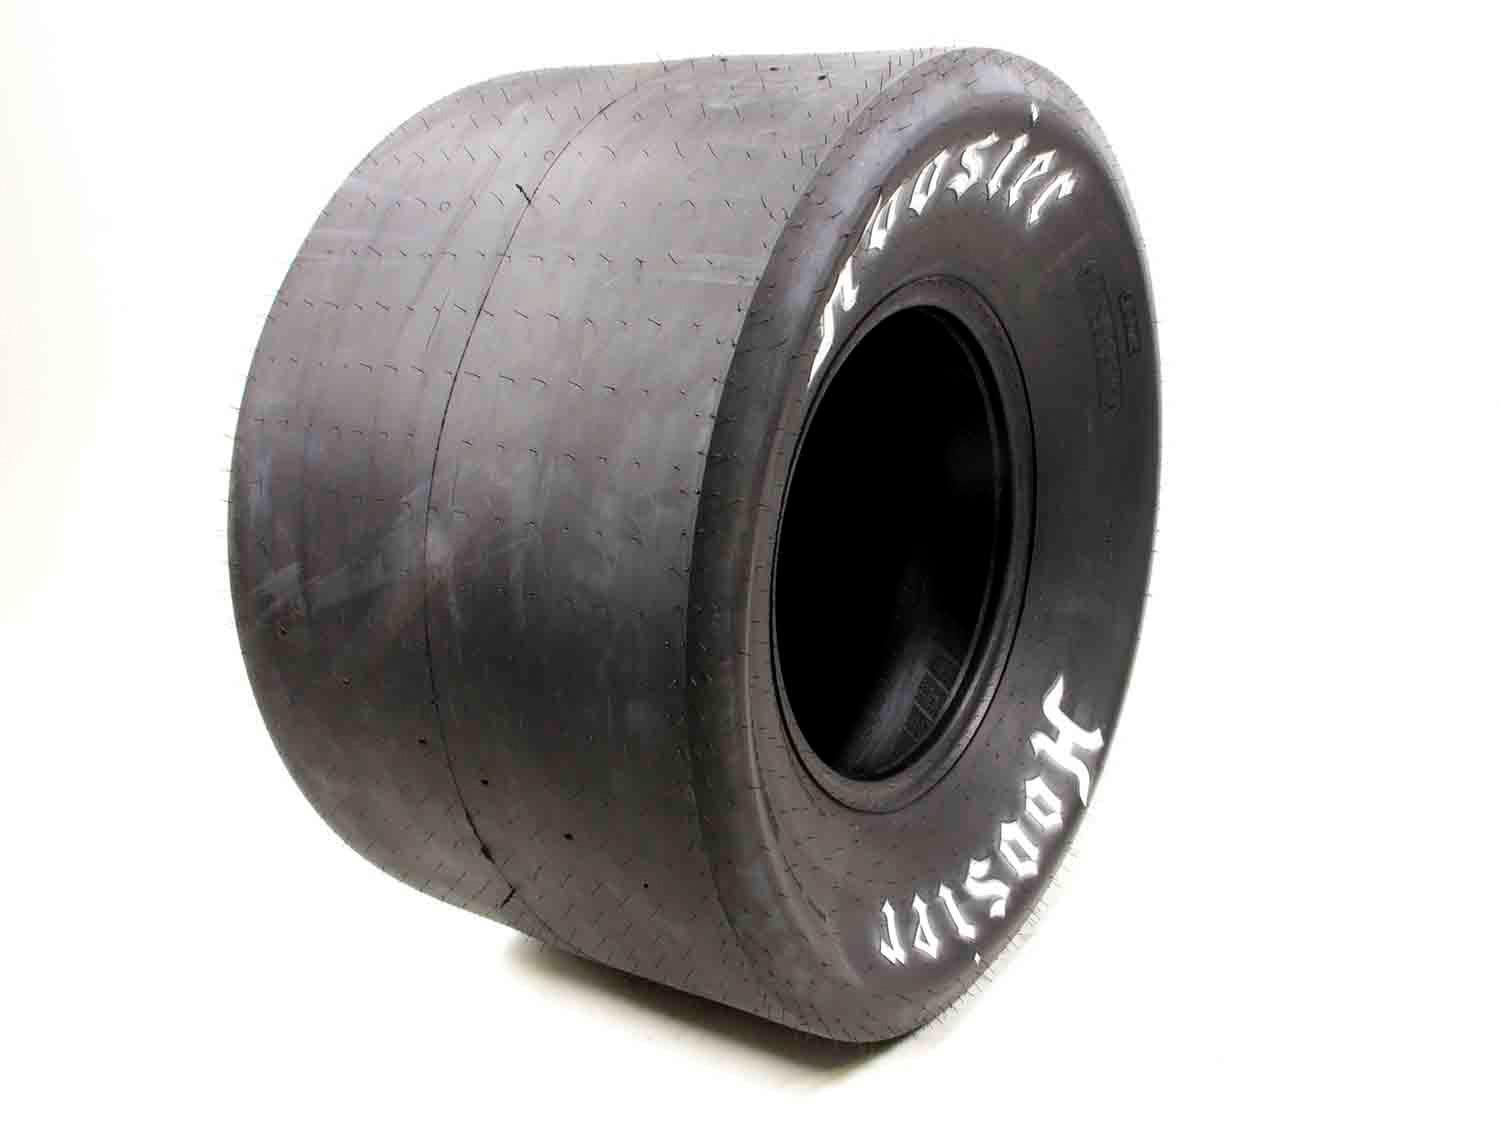 32.5/16.5-15 Drag Tire - Burlile Performance Products